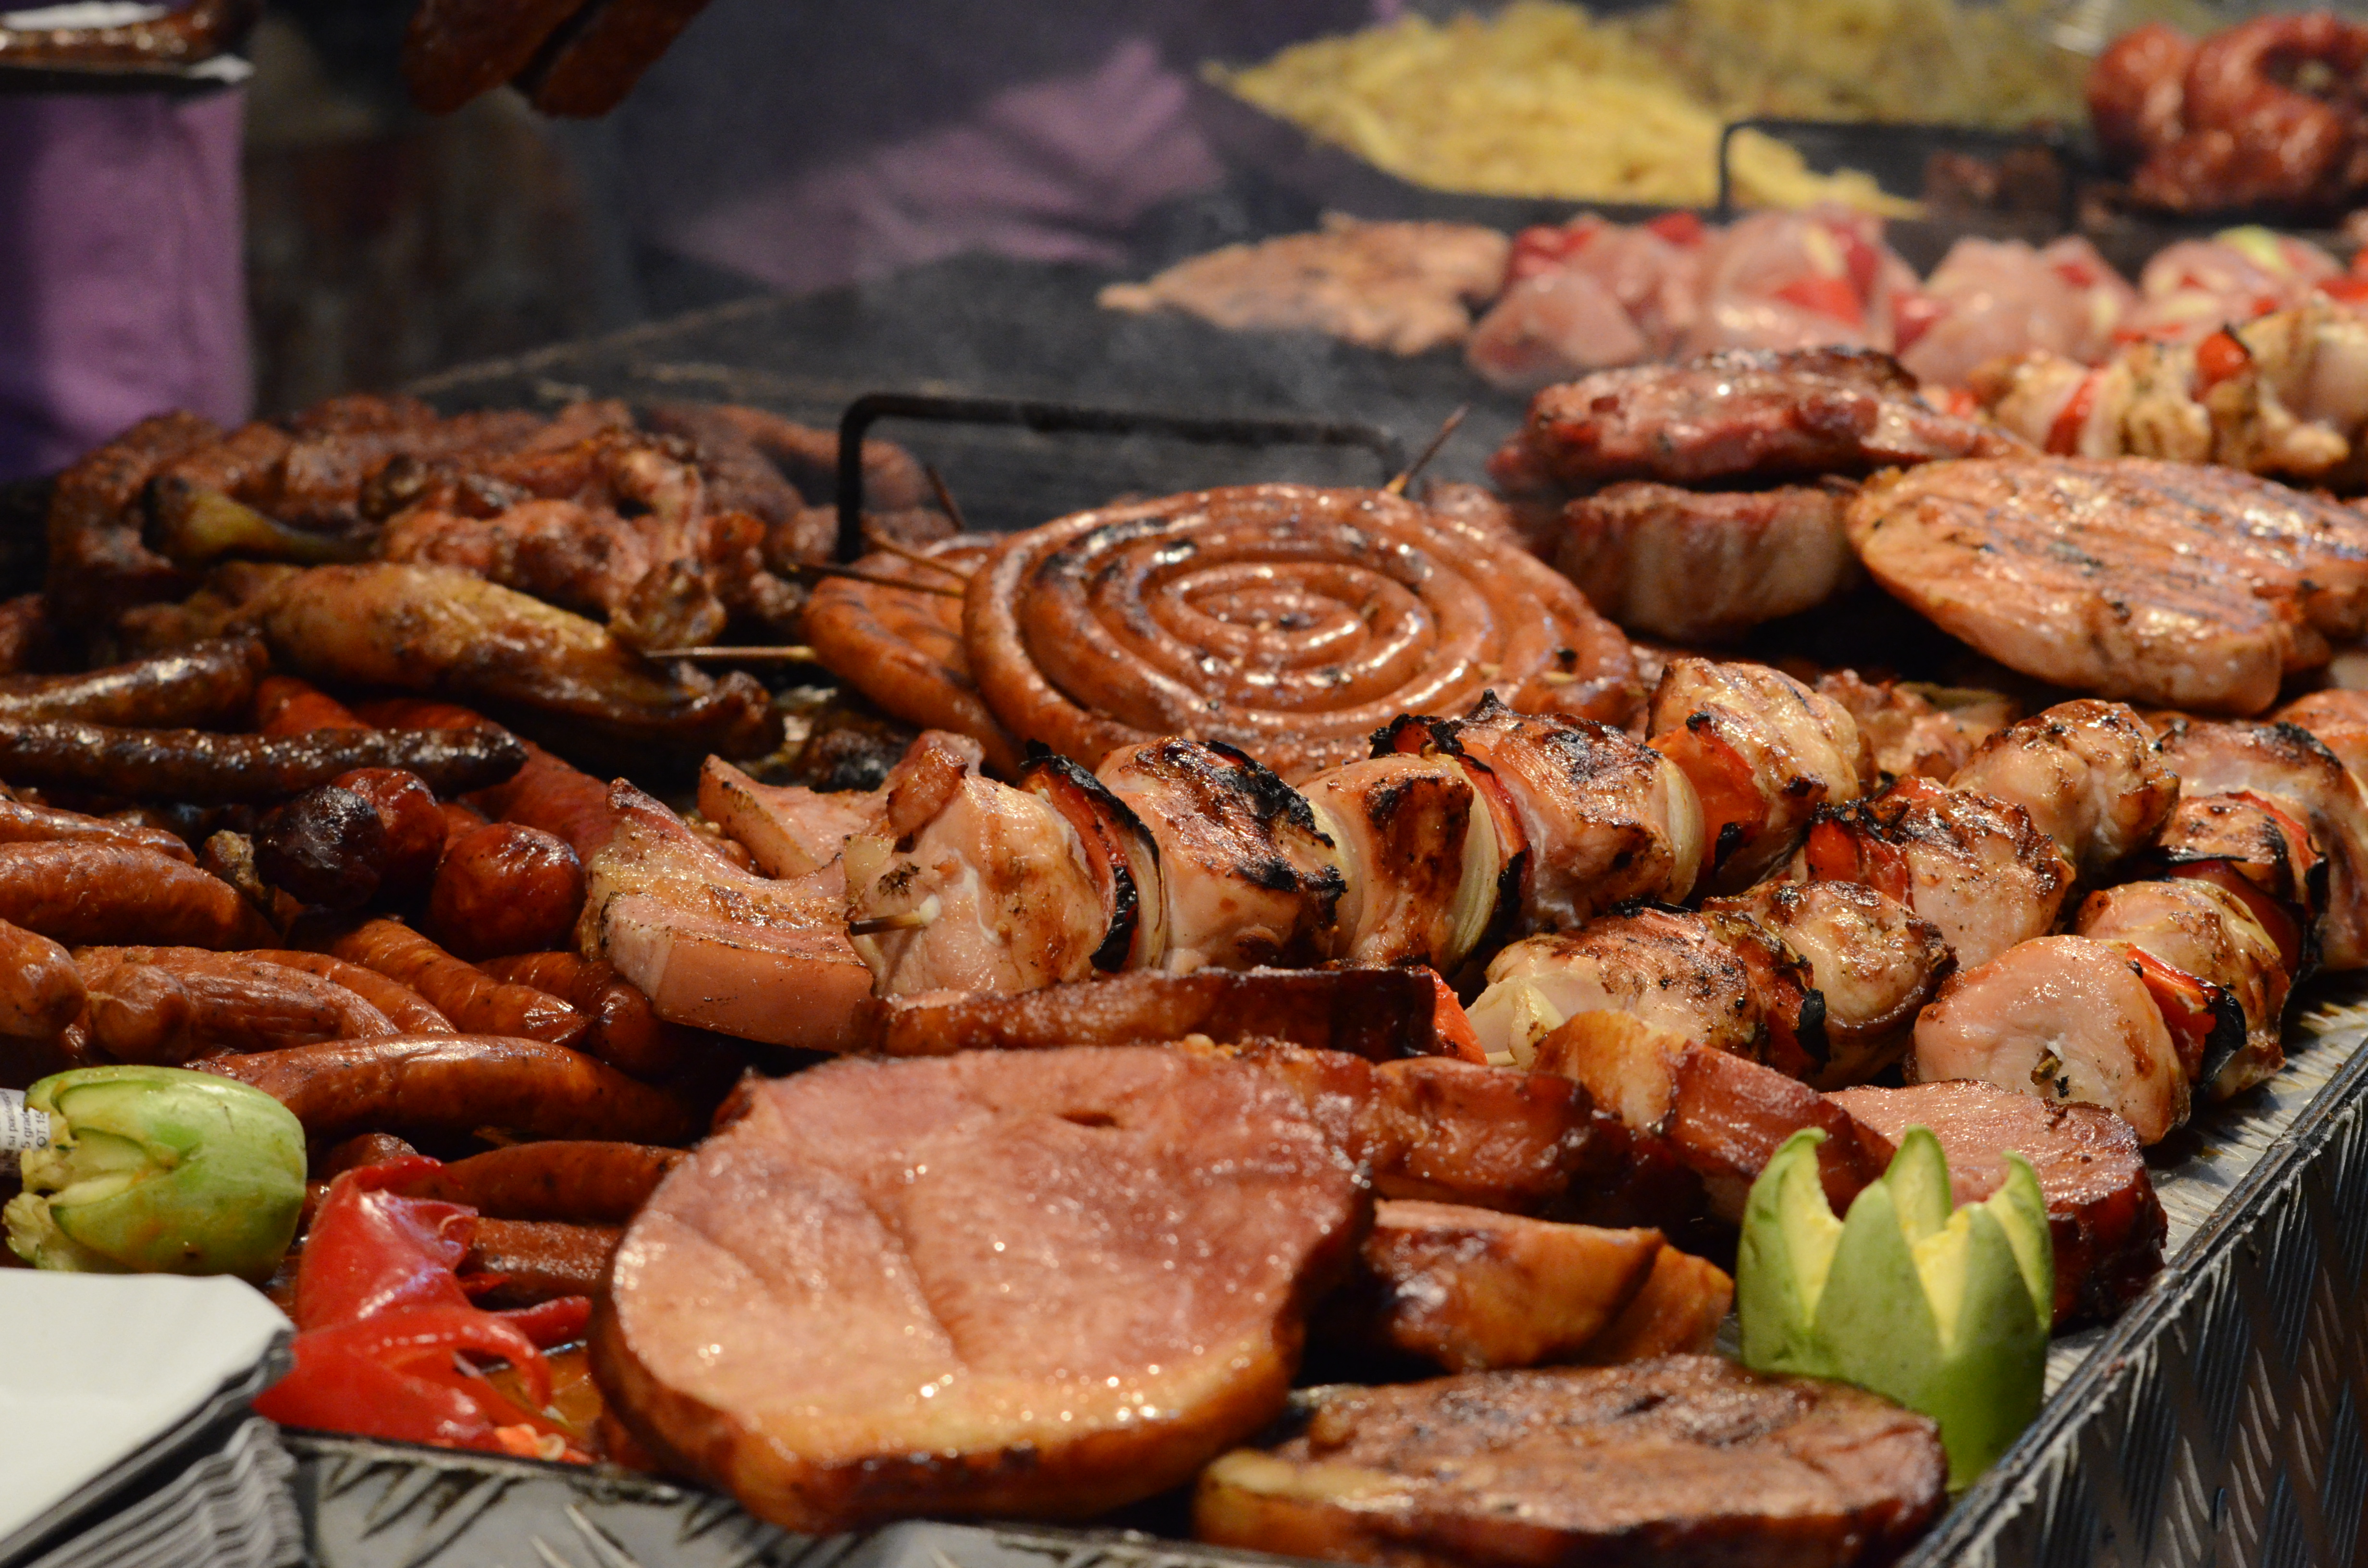 File:Barbecue food in Romania.JPG - Wikimedia Commons